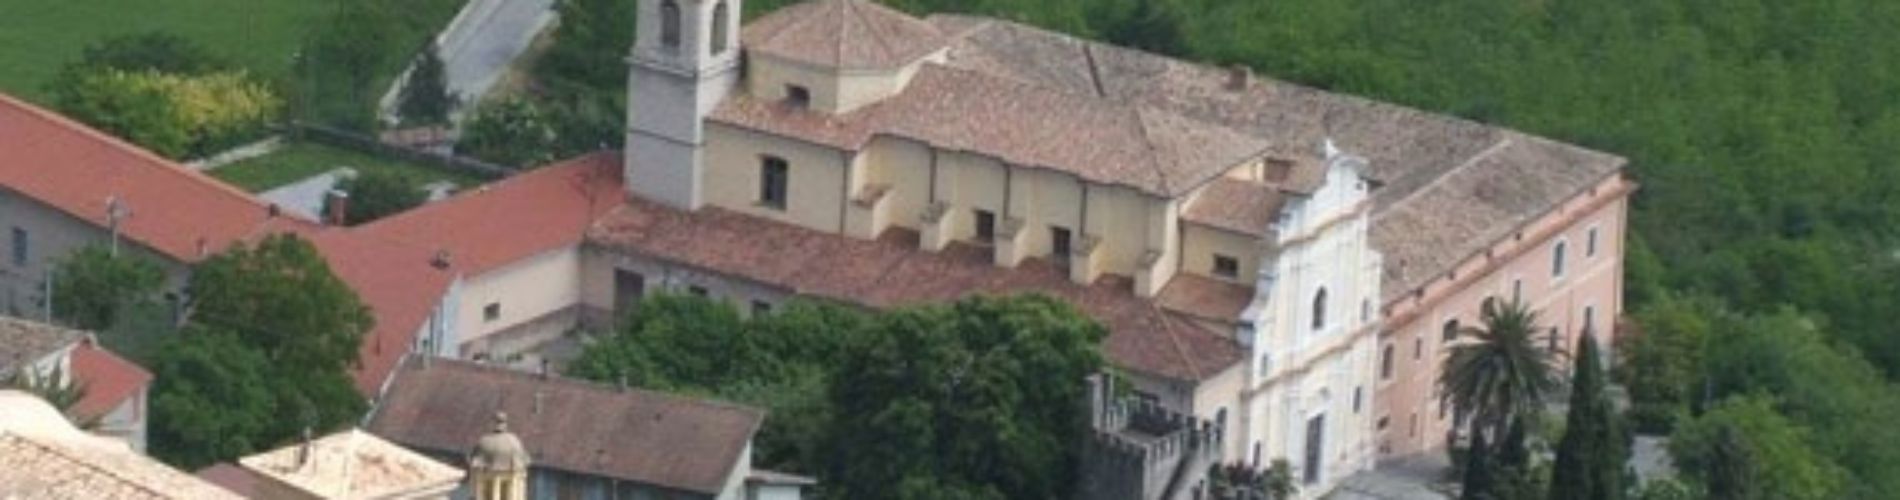 Ex Convento di San Nicola